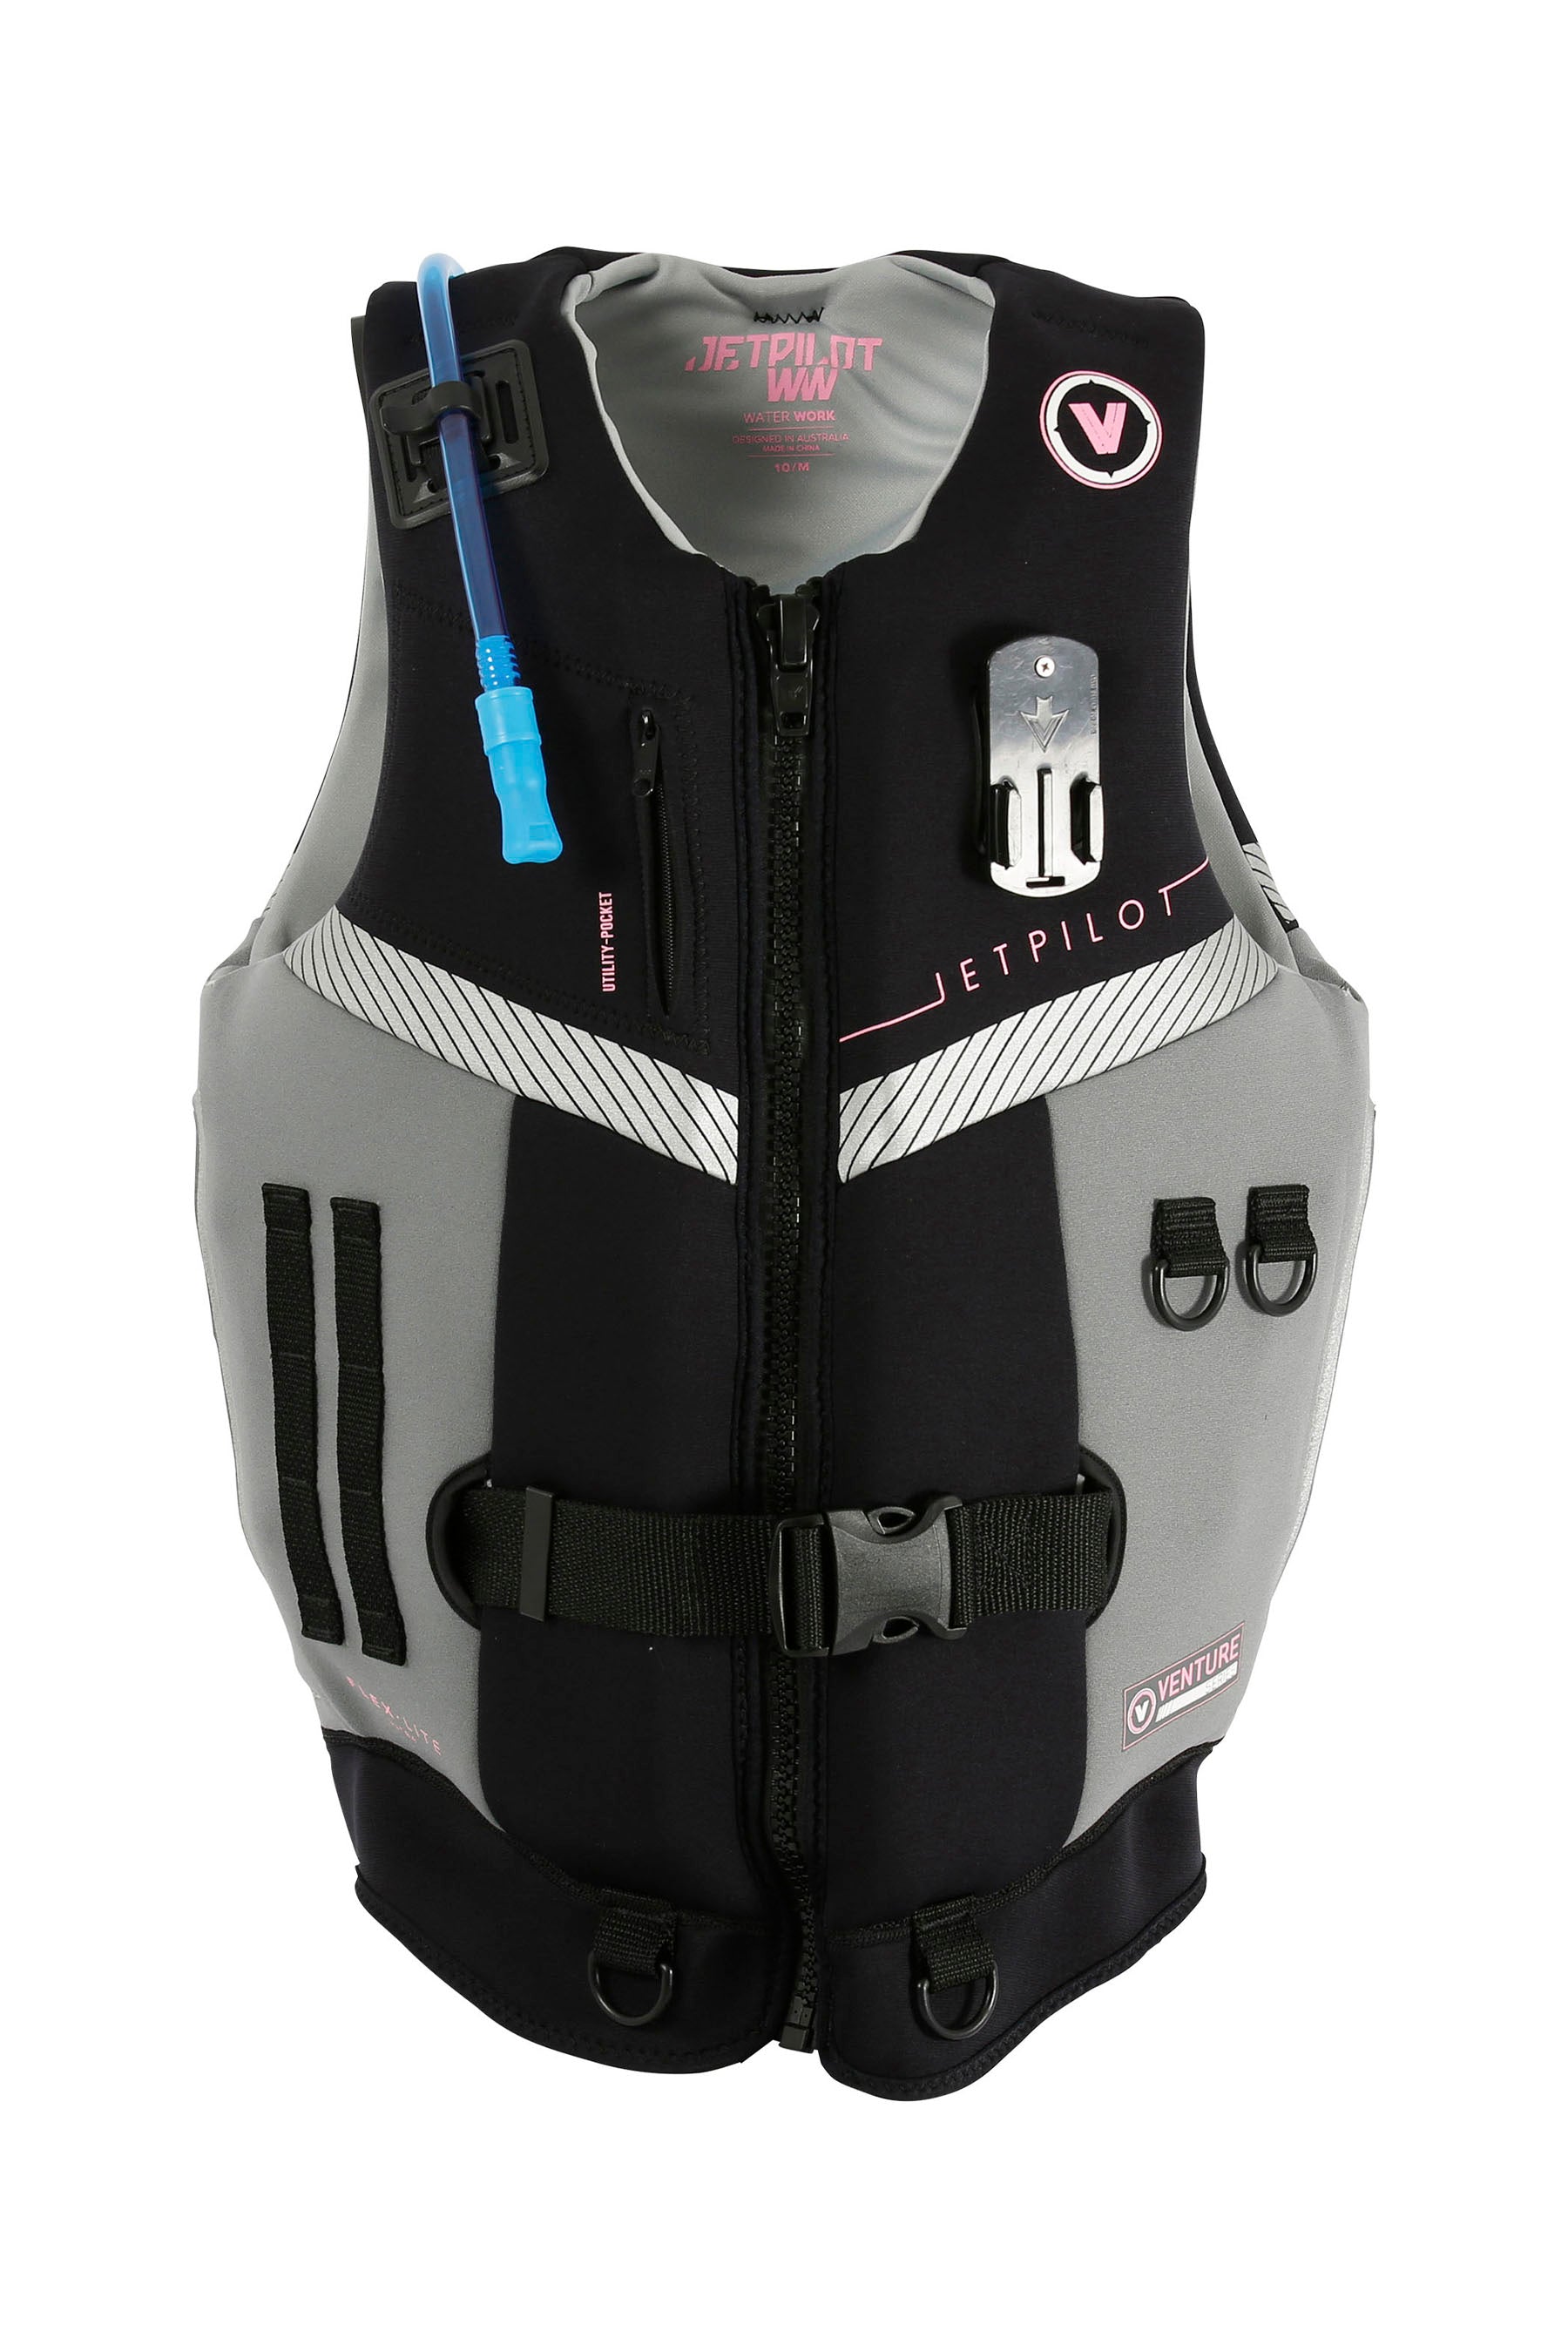 Jetpilot Venture Ladies Neo Life Jacket Black